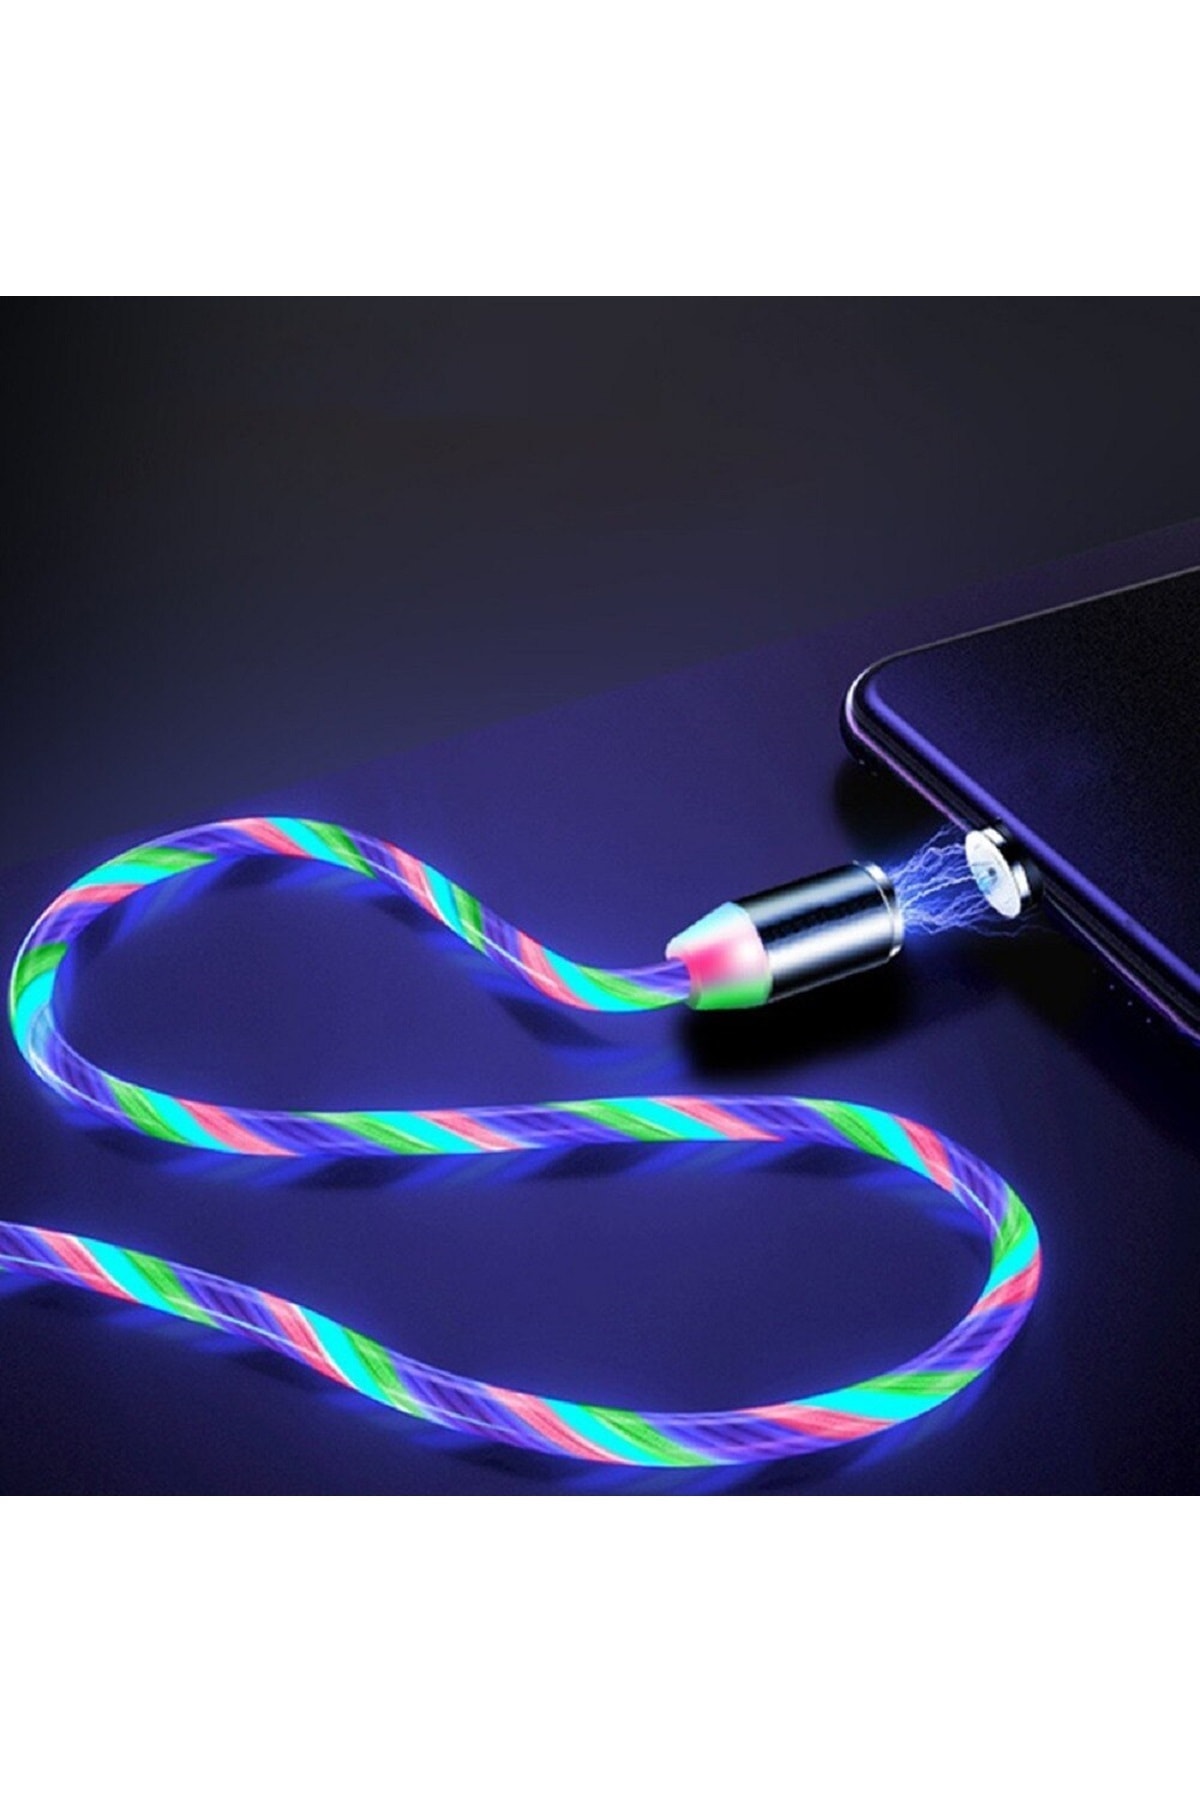 Manyetik Mıknatıslı Akan Işıklı 3 Uçlu Karışık Renkli Rgb Usb Kablo Iphone Samsung Xiaomi Uyumlu